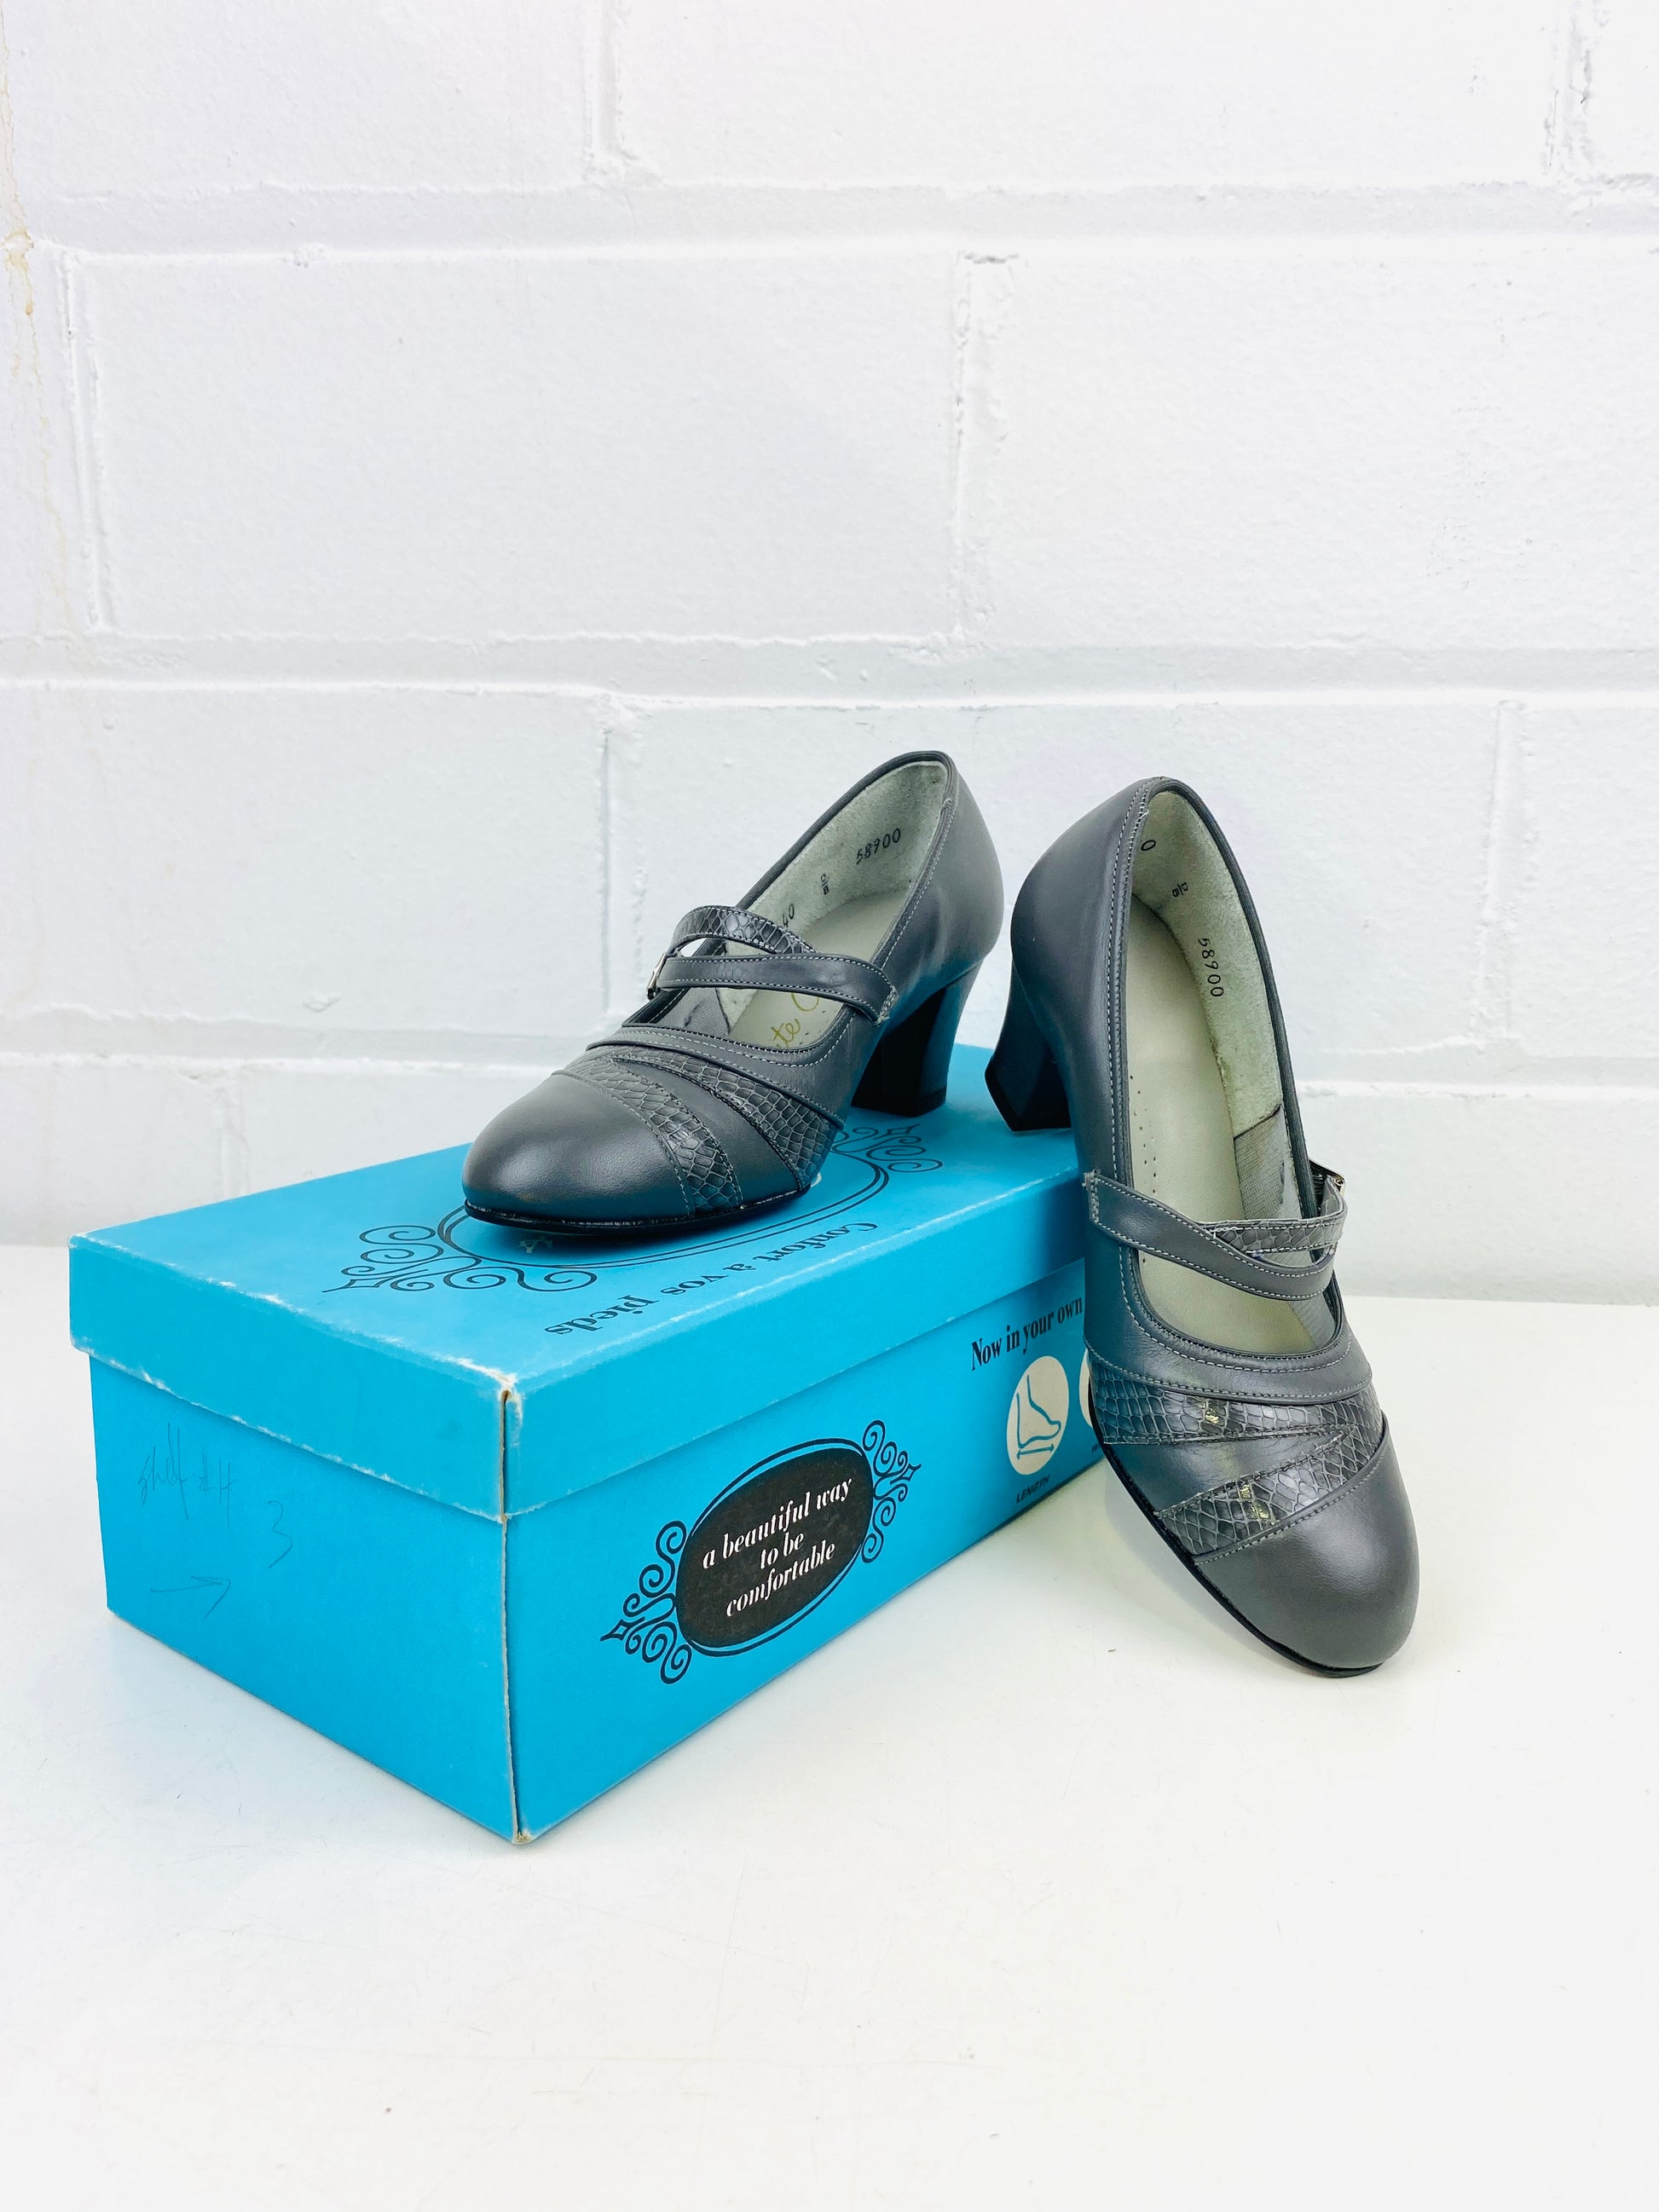 Vintage Deadstock Shoes, Women's 1980s Grey Leather Mid-Heel Pumps, NOS, 8292